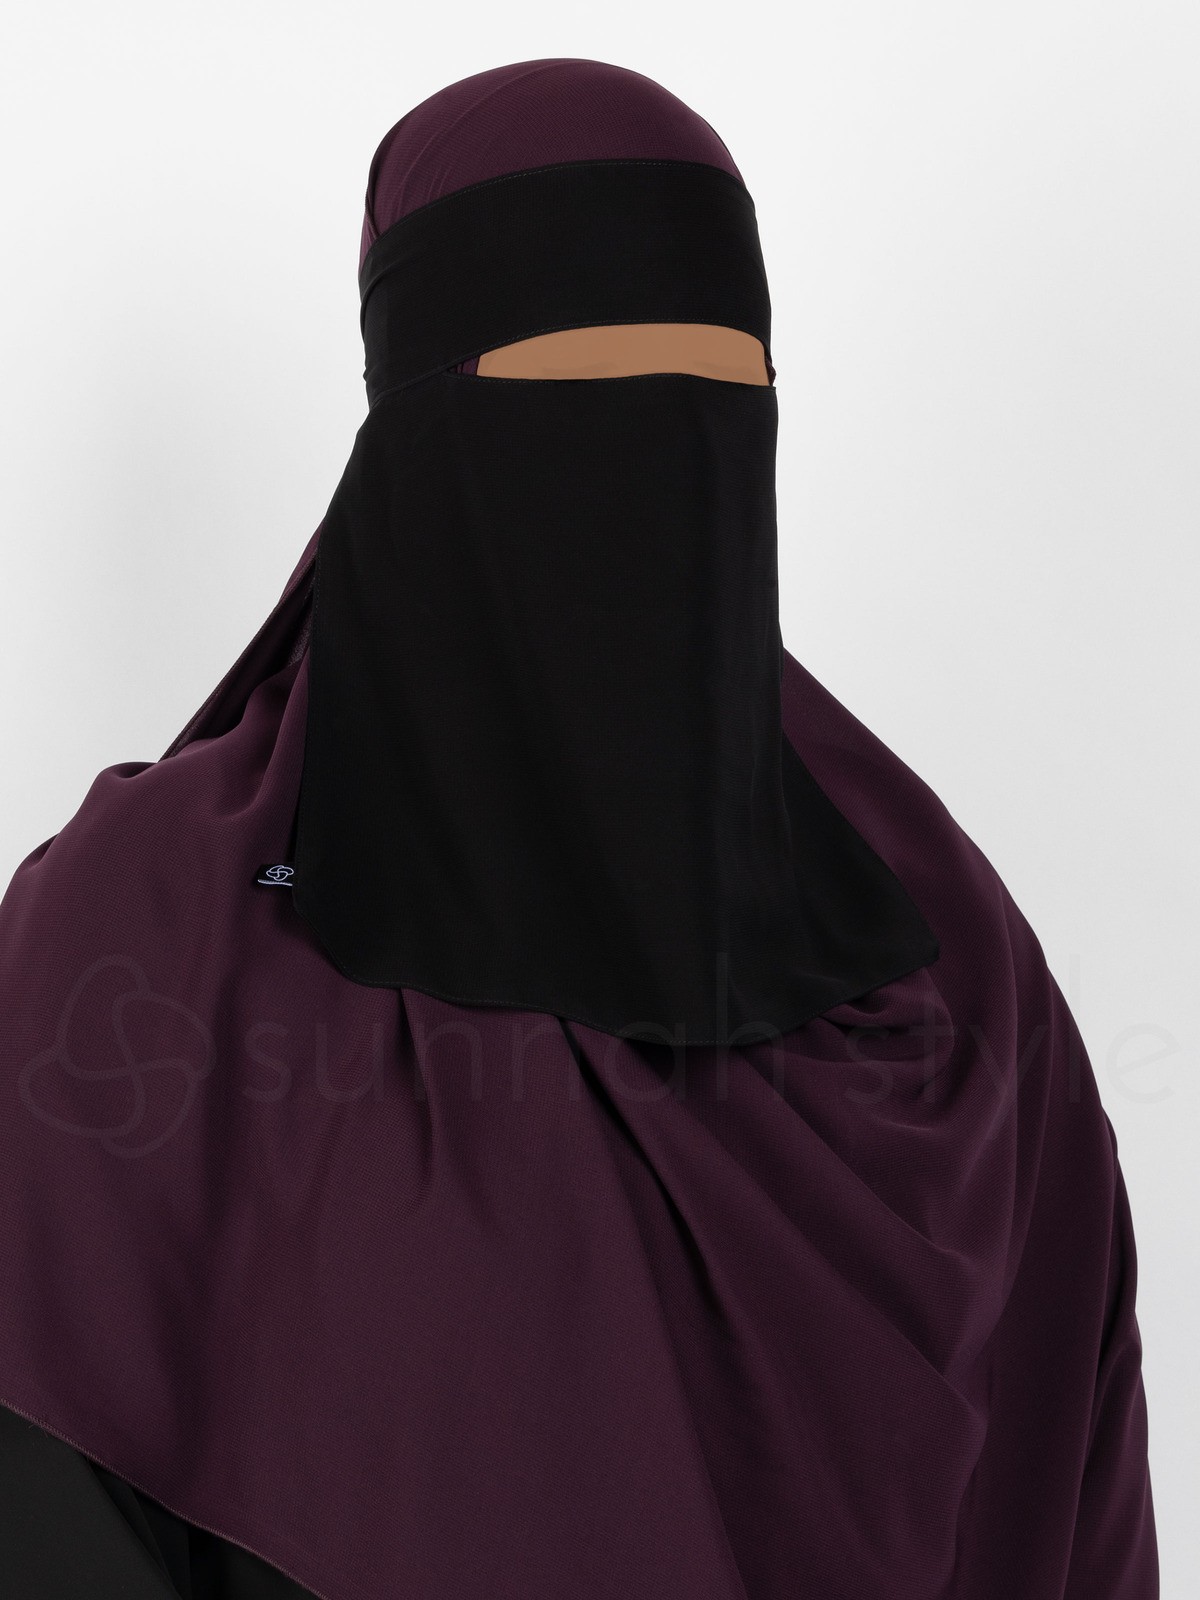 Sunnah Style - Short One Layer Niqab (Black)